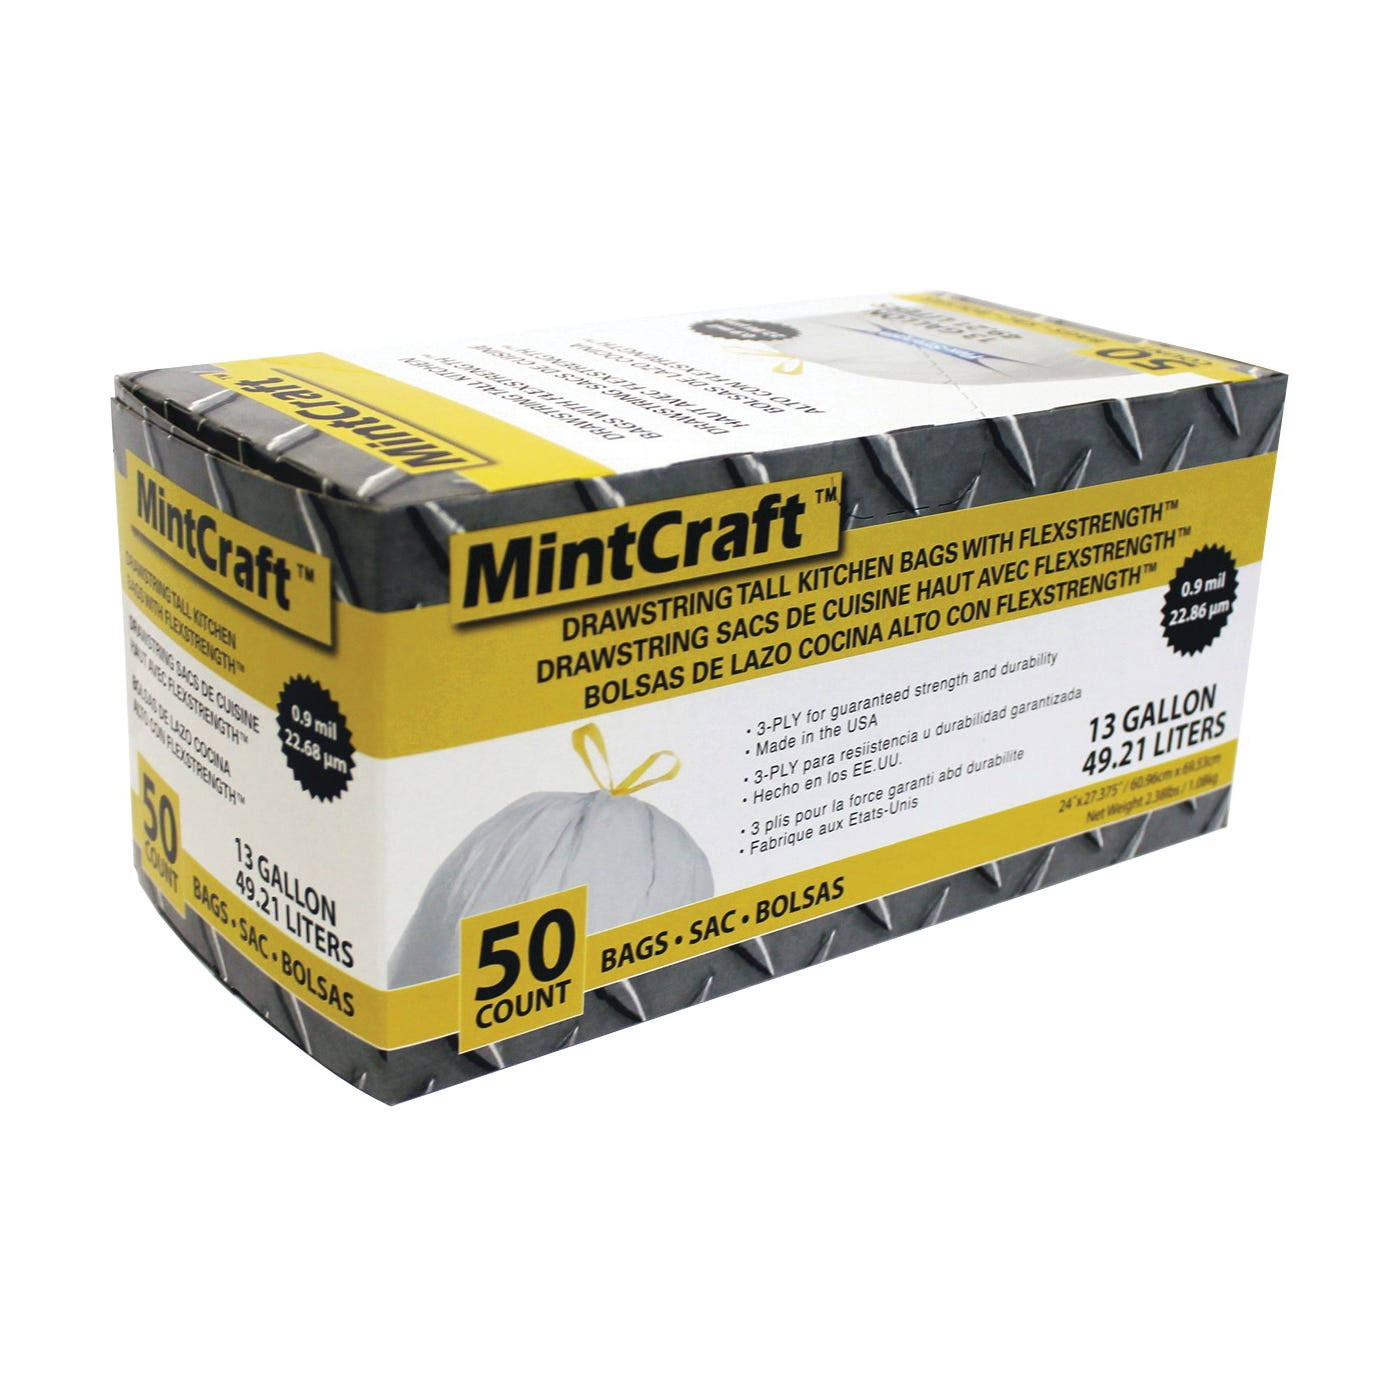 Mintcraft Drawstring Tall Kitchen Bags - 13 Gallon